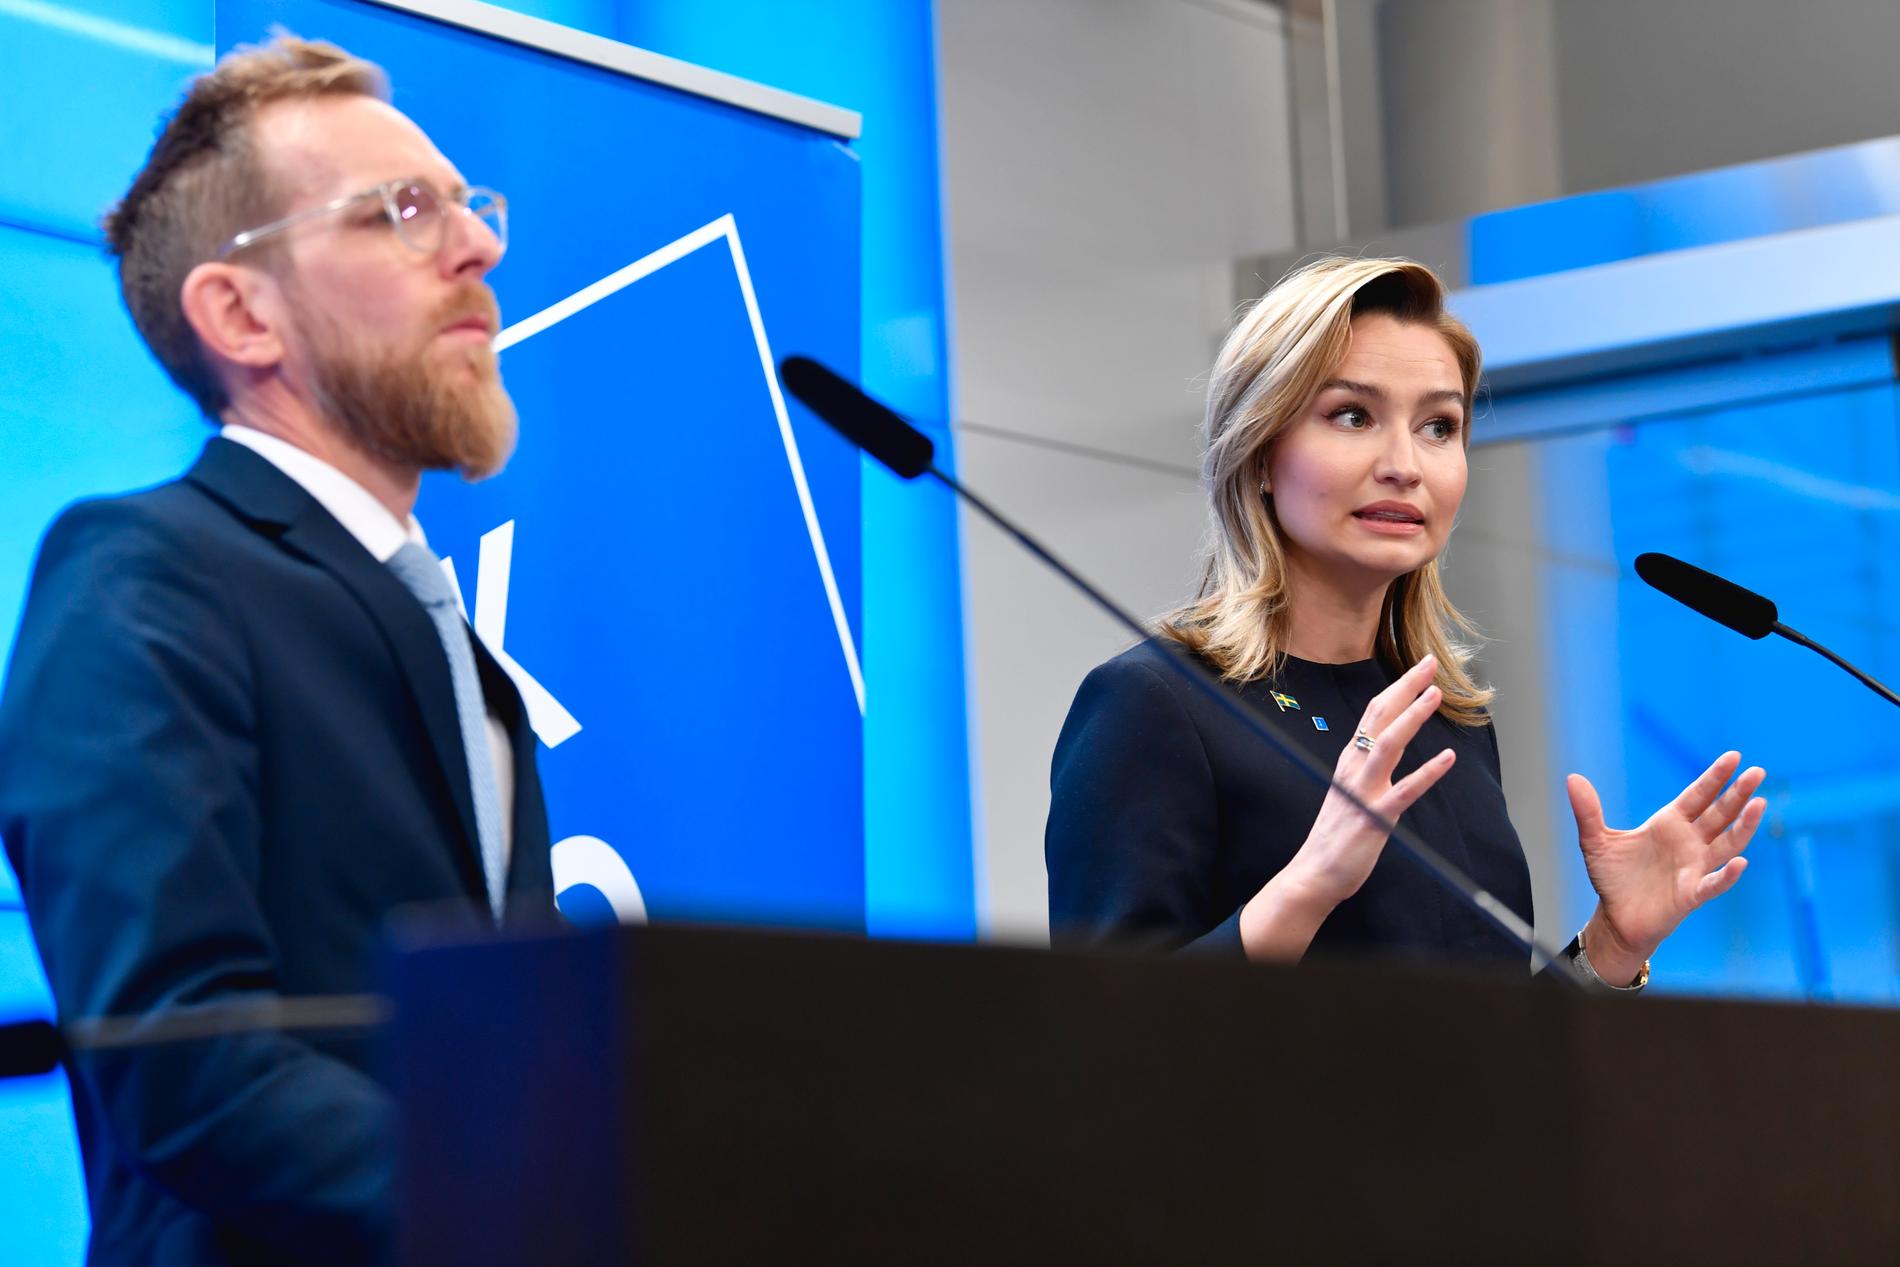 Kristdemokraternas ekonomisk-politiske talesperson Jakob Forssmed och partiledare Ebba Busch presenterar partiets budgetmotion.